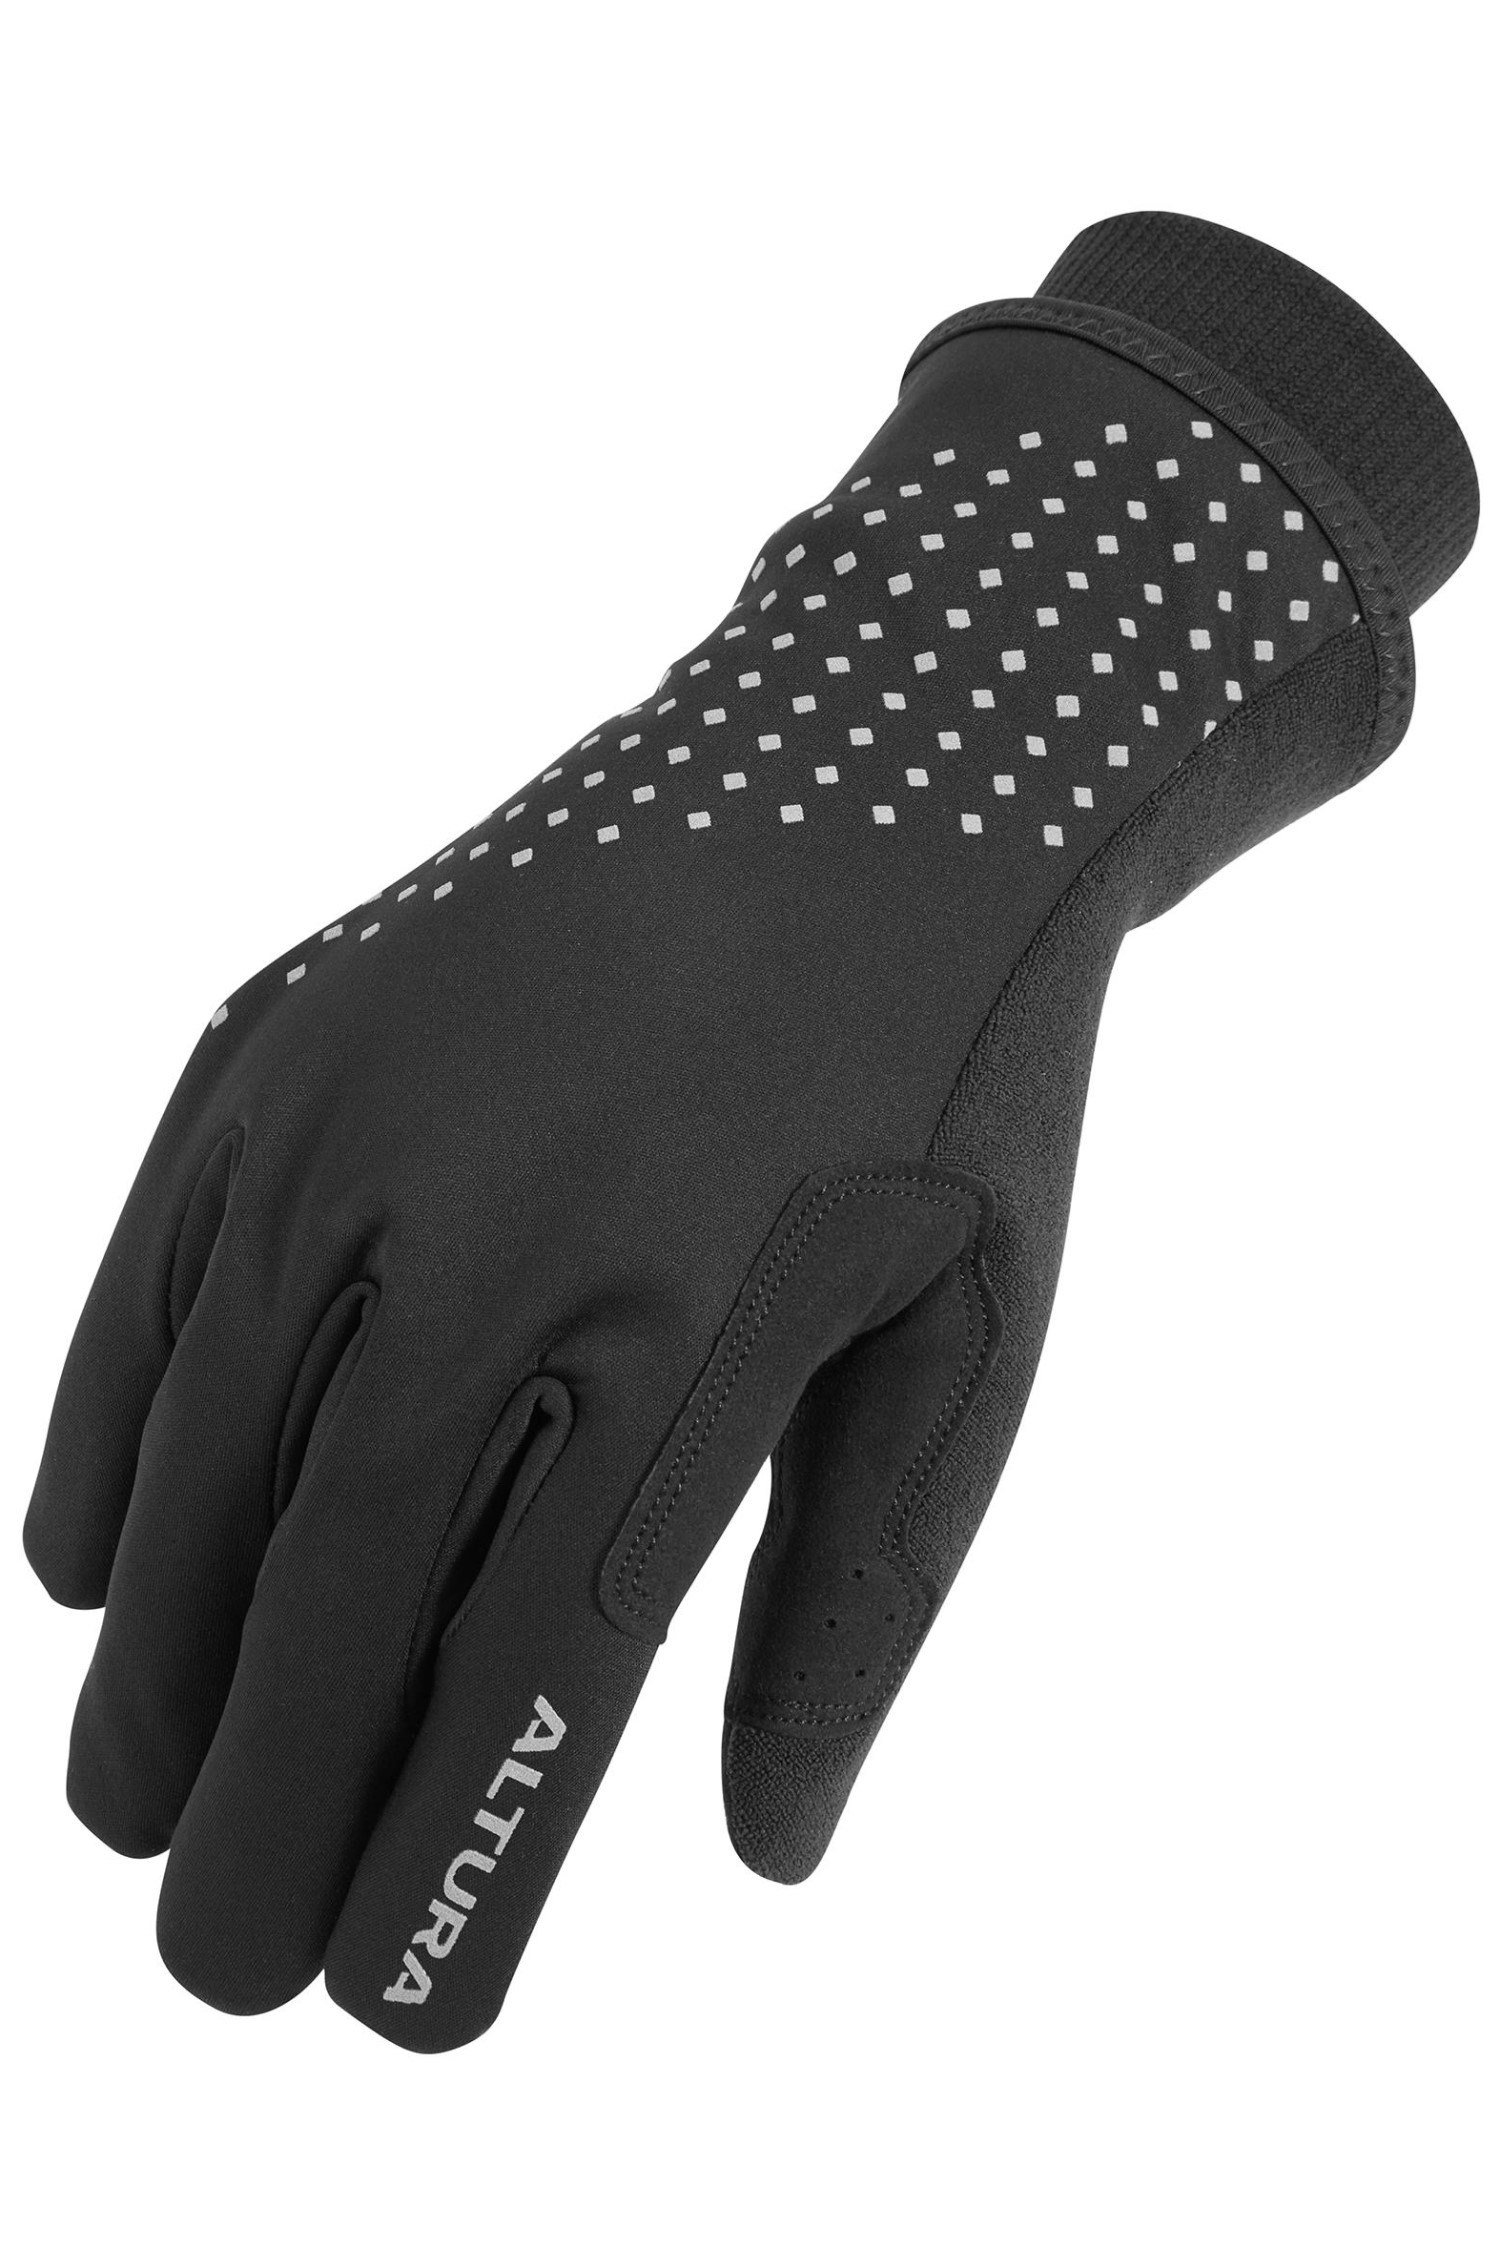 Nightvision Unisex Waterproof Insulated Gloves -